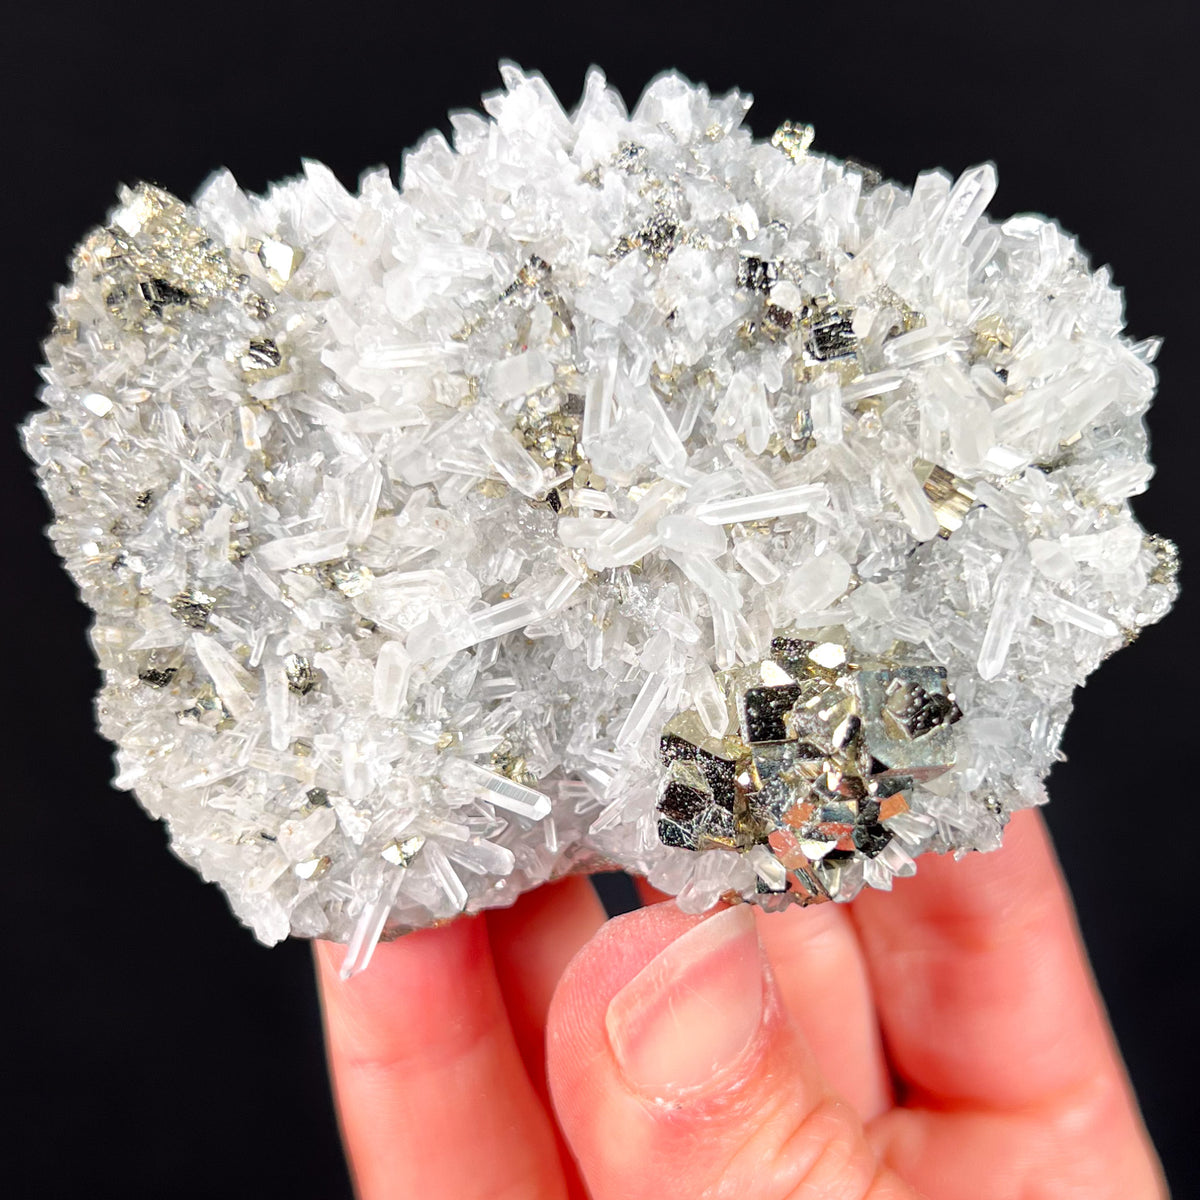 Pyrite with Quartz Mineral Specimen from Peru